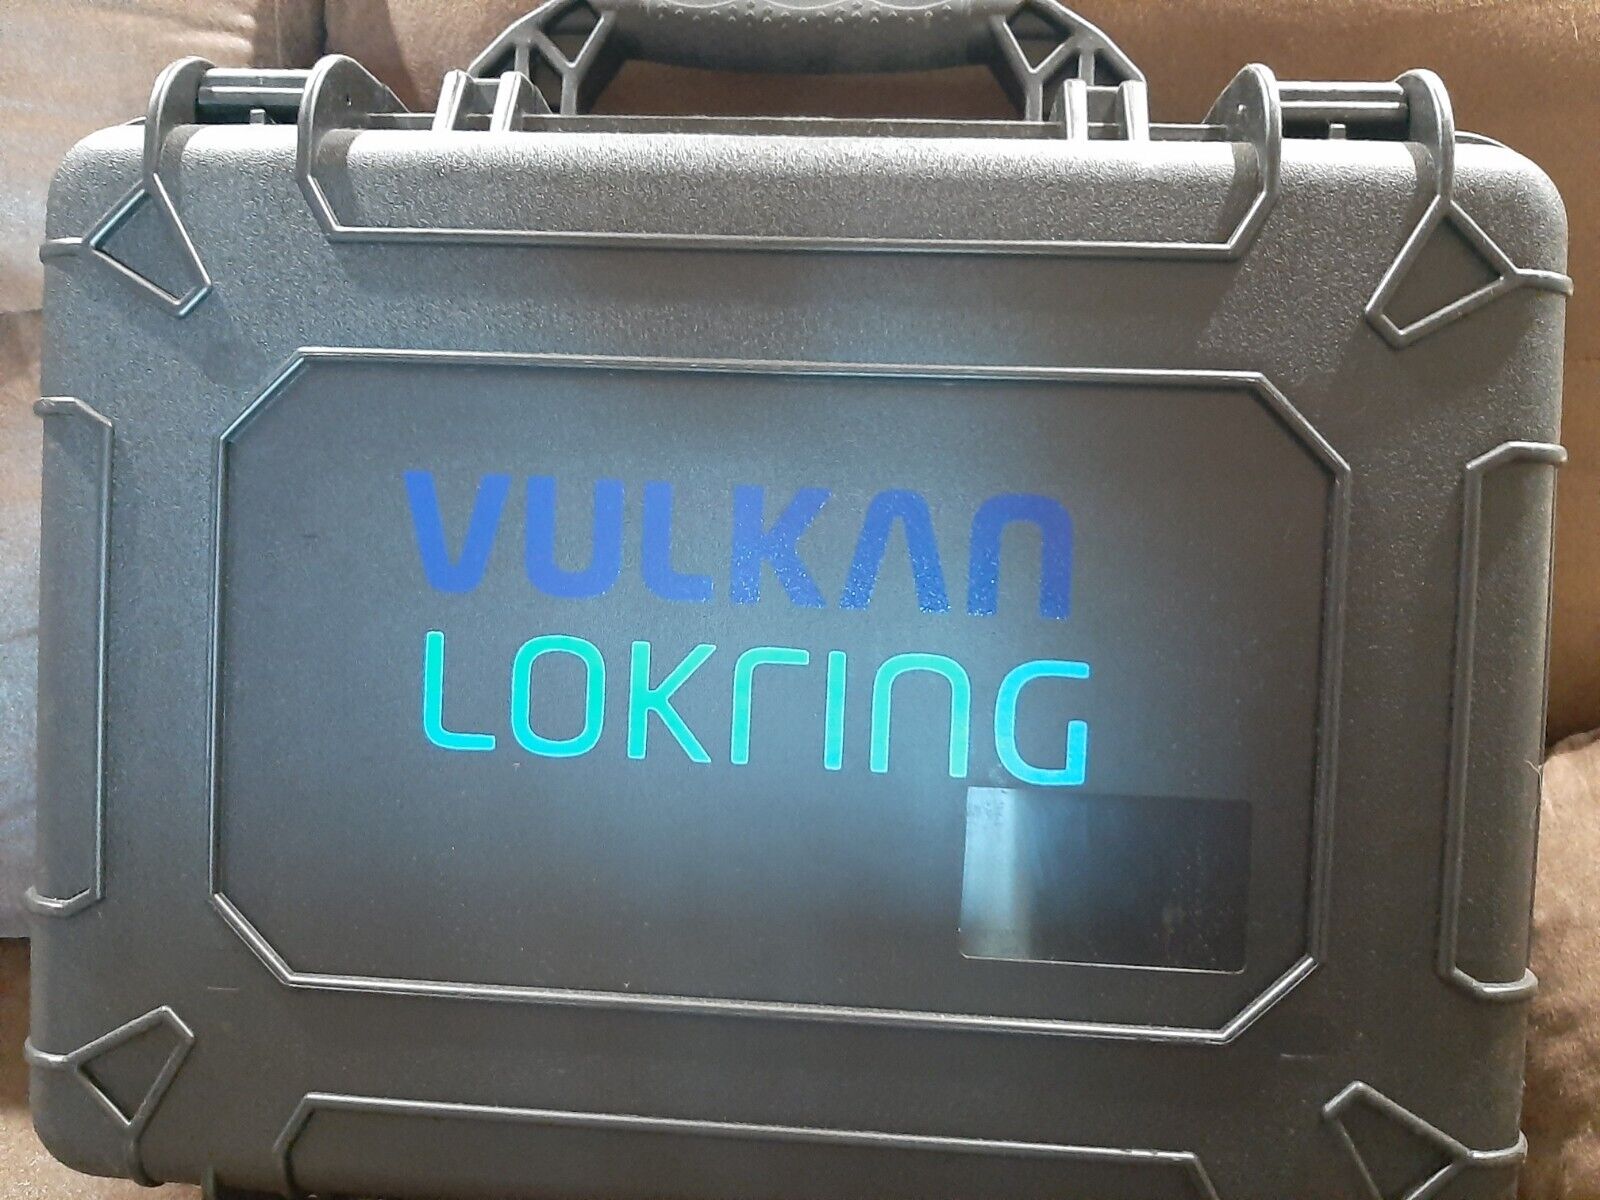 Vulcan Lokring R600a Refrigerant Charging Kit